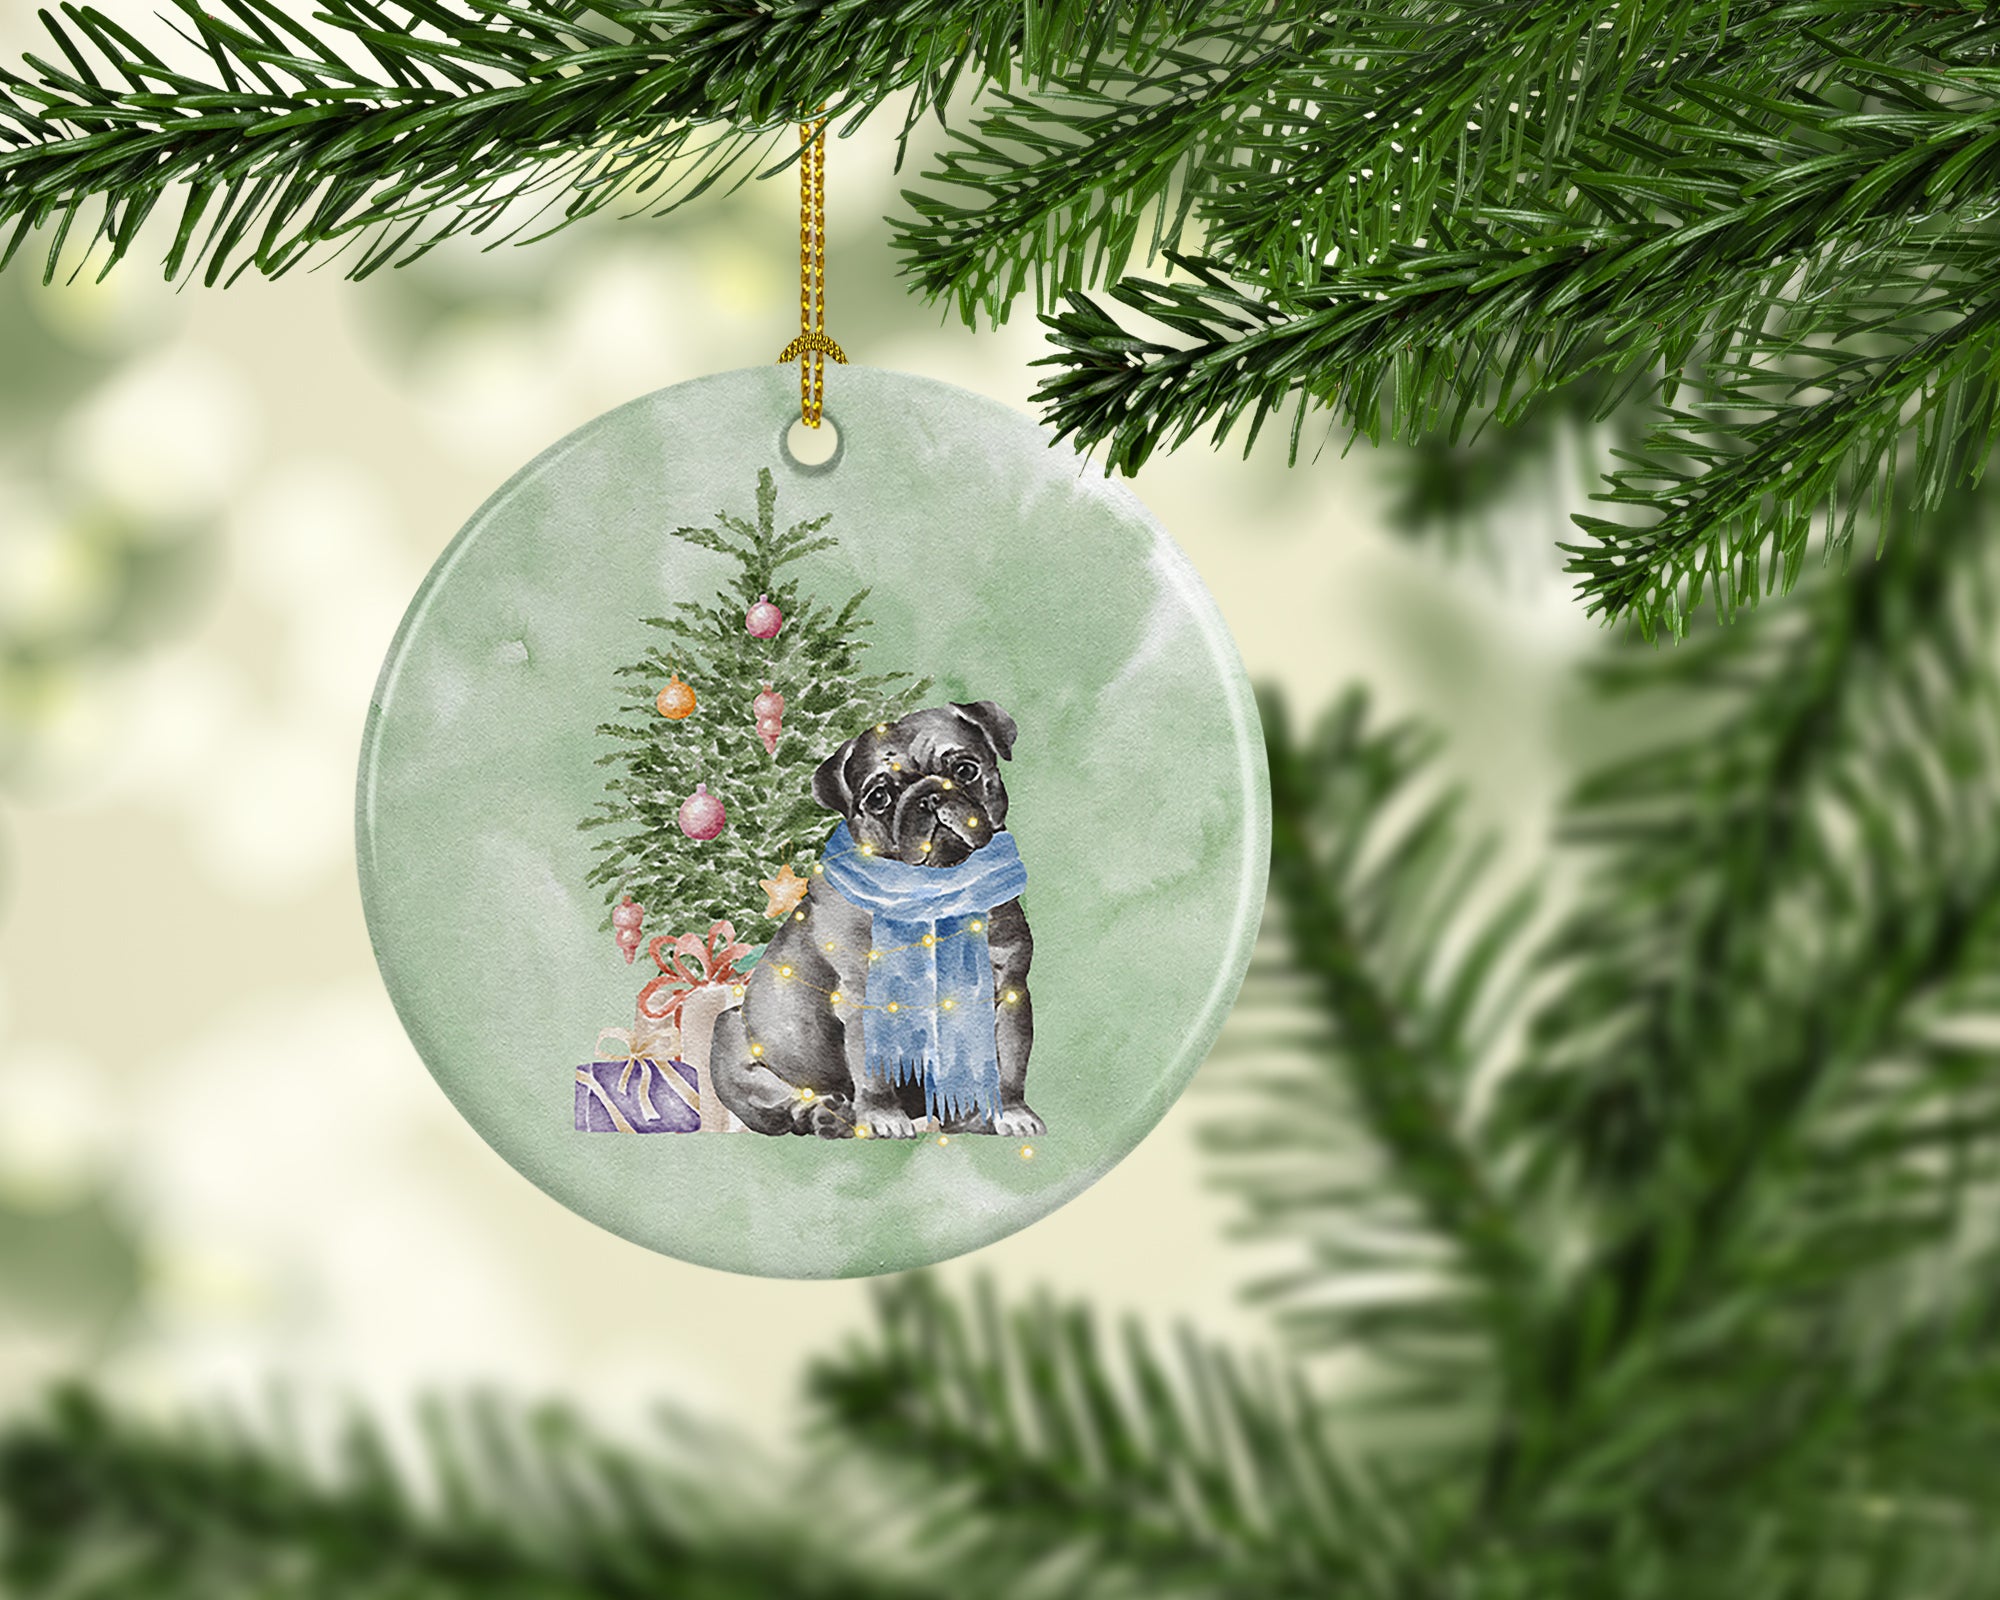 Buy this Christmas Black Pug Ceramic Ornament